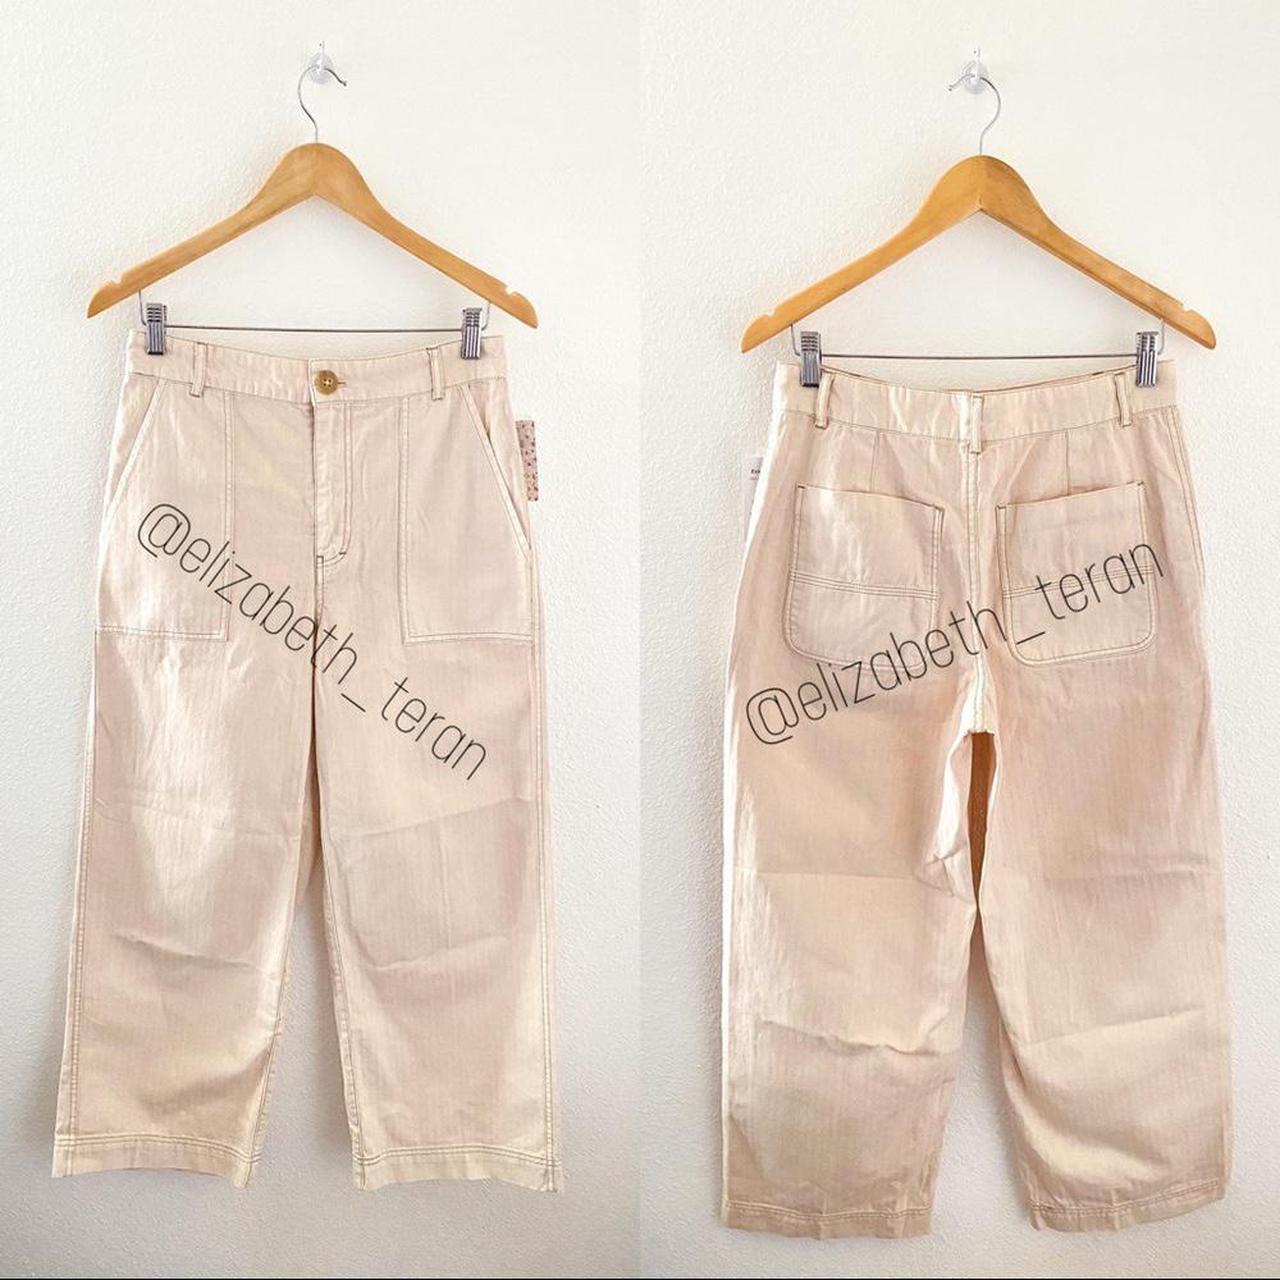 GenesinlifeShops Australia - 'Sunday' cashmere trousers Cotton Lisa Yang -  adidas Originals x Fiorucci legging shorts in coral